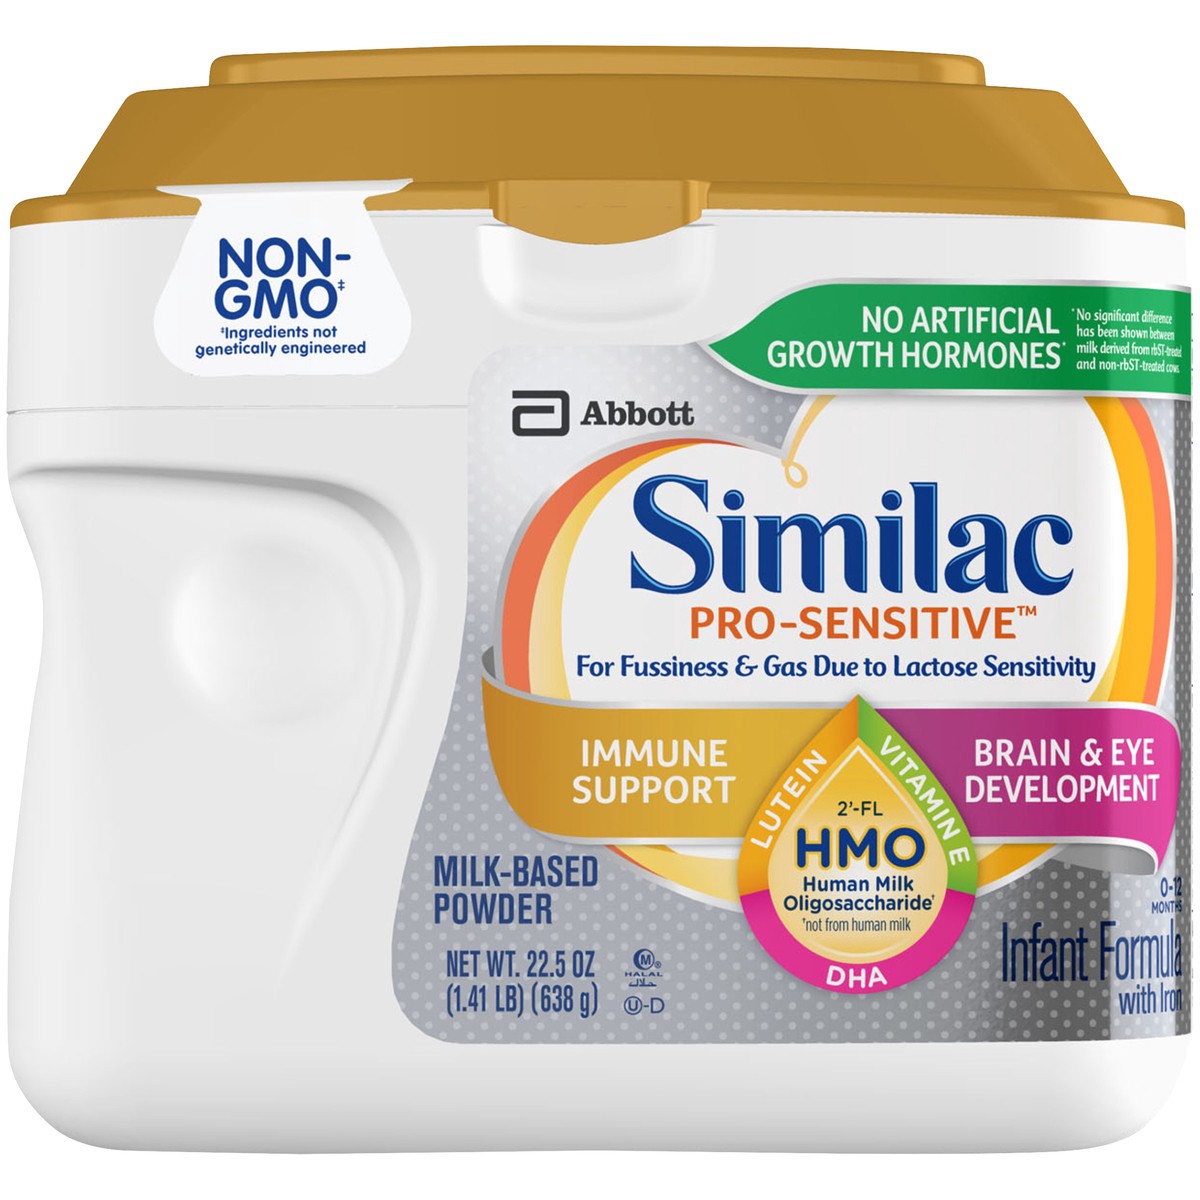 slide 12 of 14, Similac Pro-Sensitive Infant Formula with 2''-FL Human Milk Oligosaccharide* (HMO) for Immune Support, 22.5 ounces, 22.5 oz